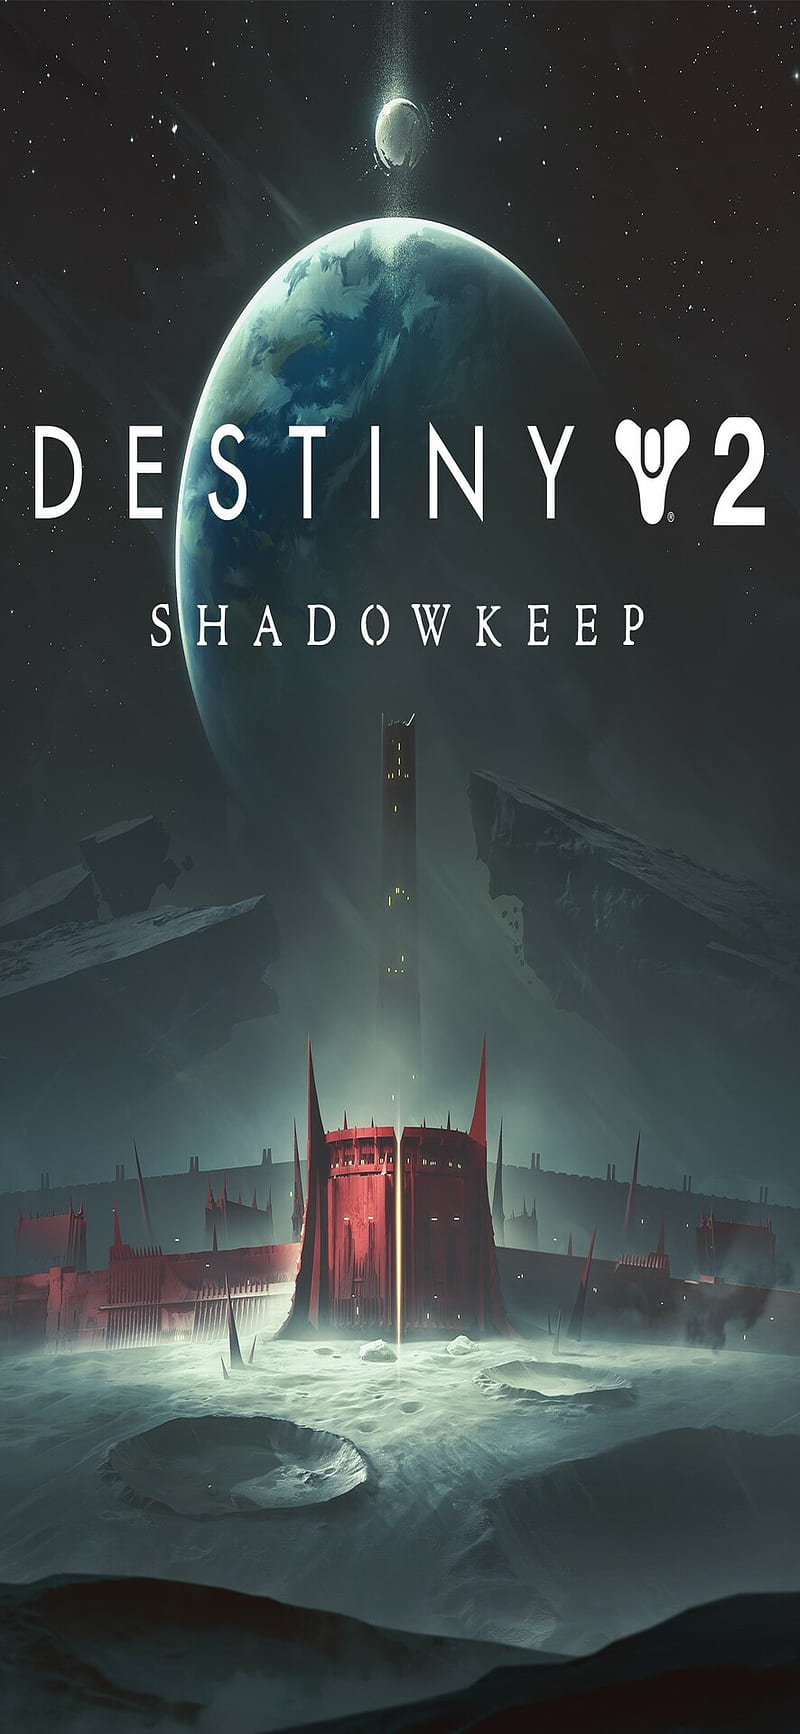 Destiny Shadowkeep wallpaper in 360x720 resolution